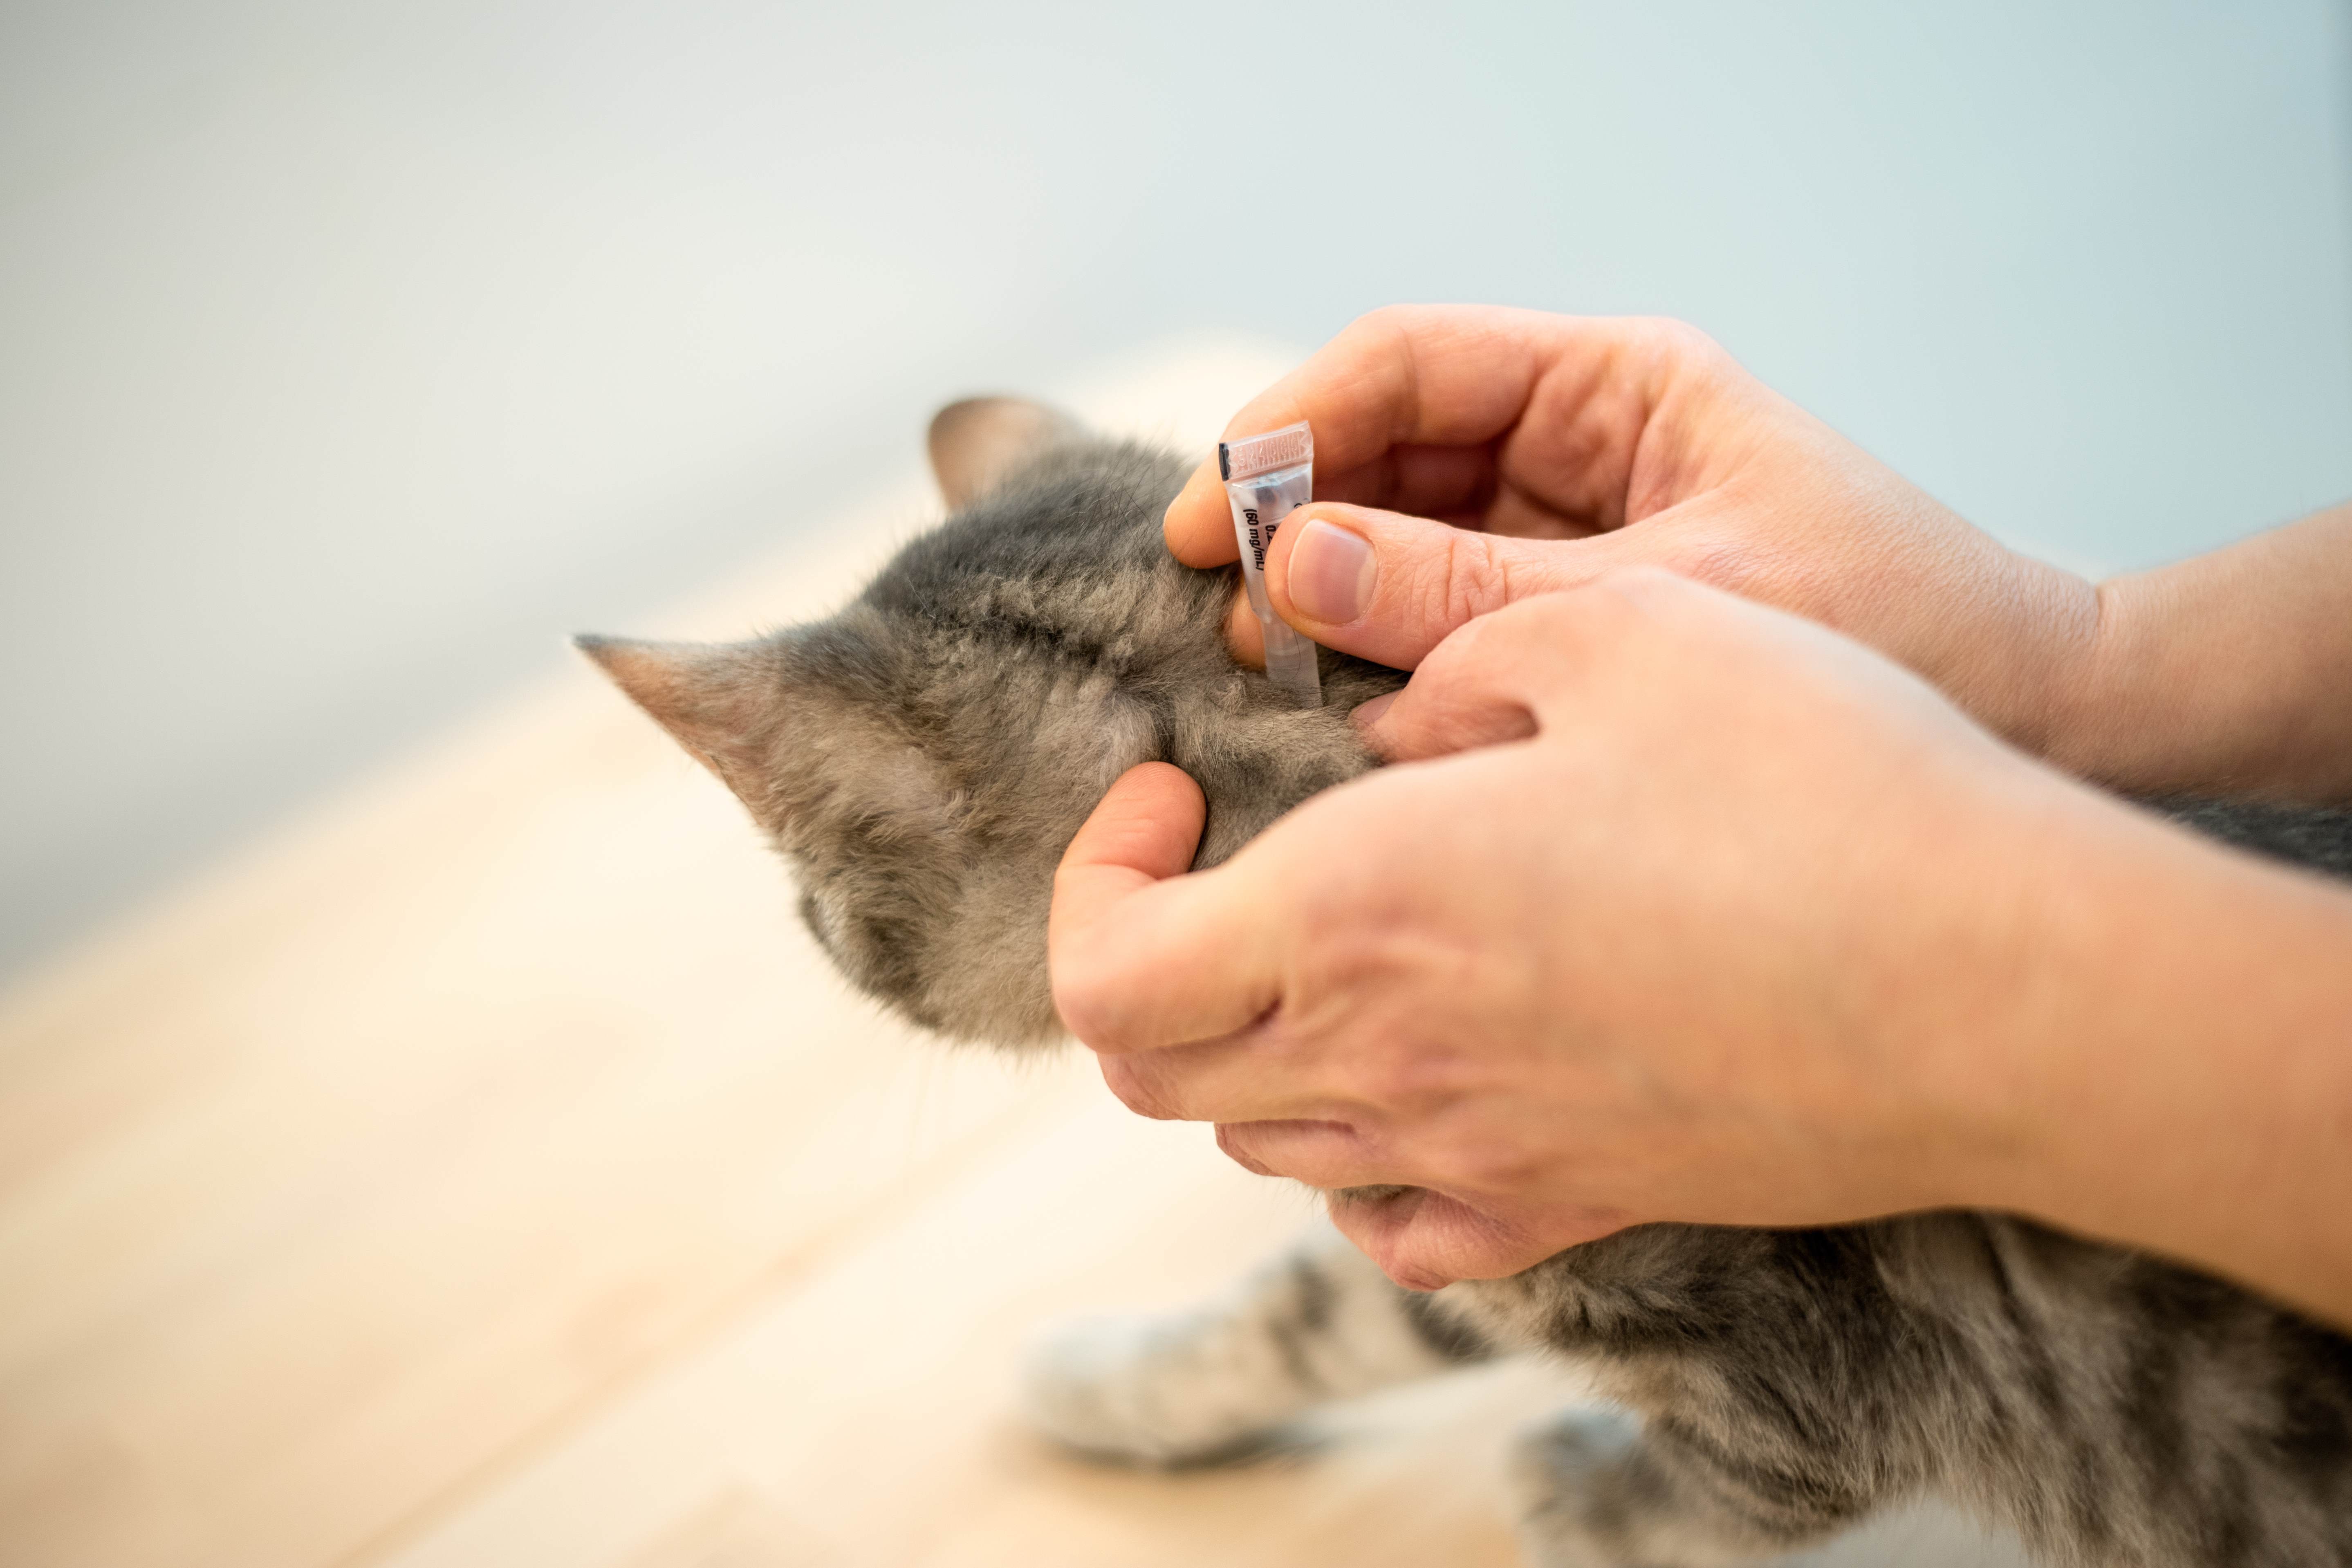 anti-flea drops to treat a cat